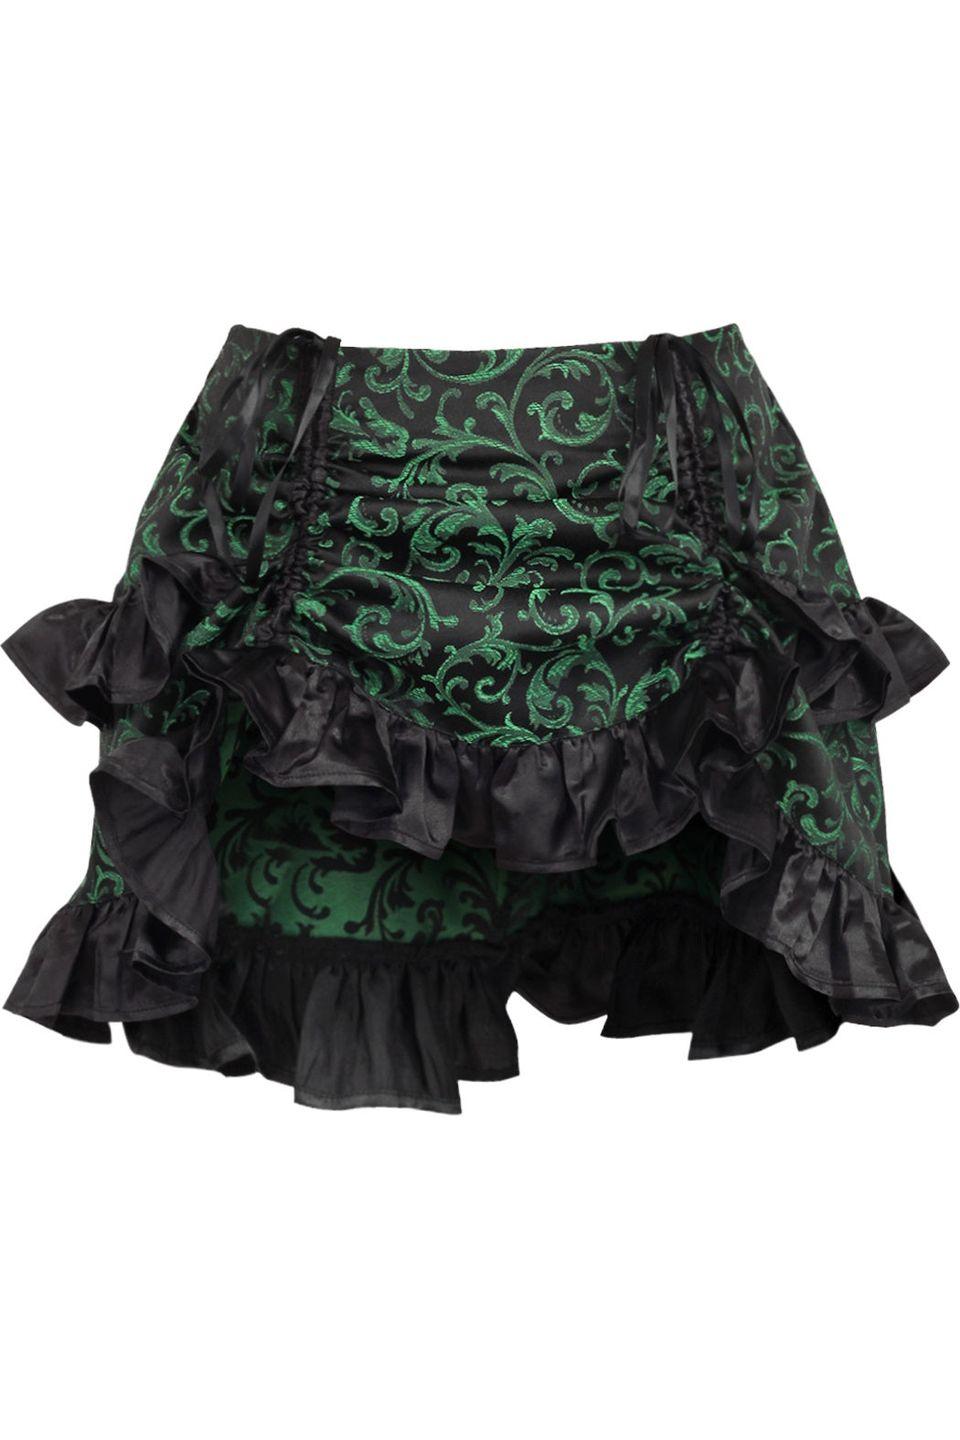 Green/Black Brocade Ruched Bustle Skirt - AMIClubwear